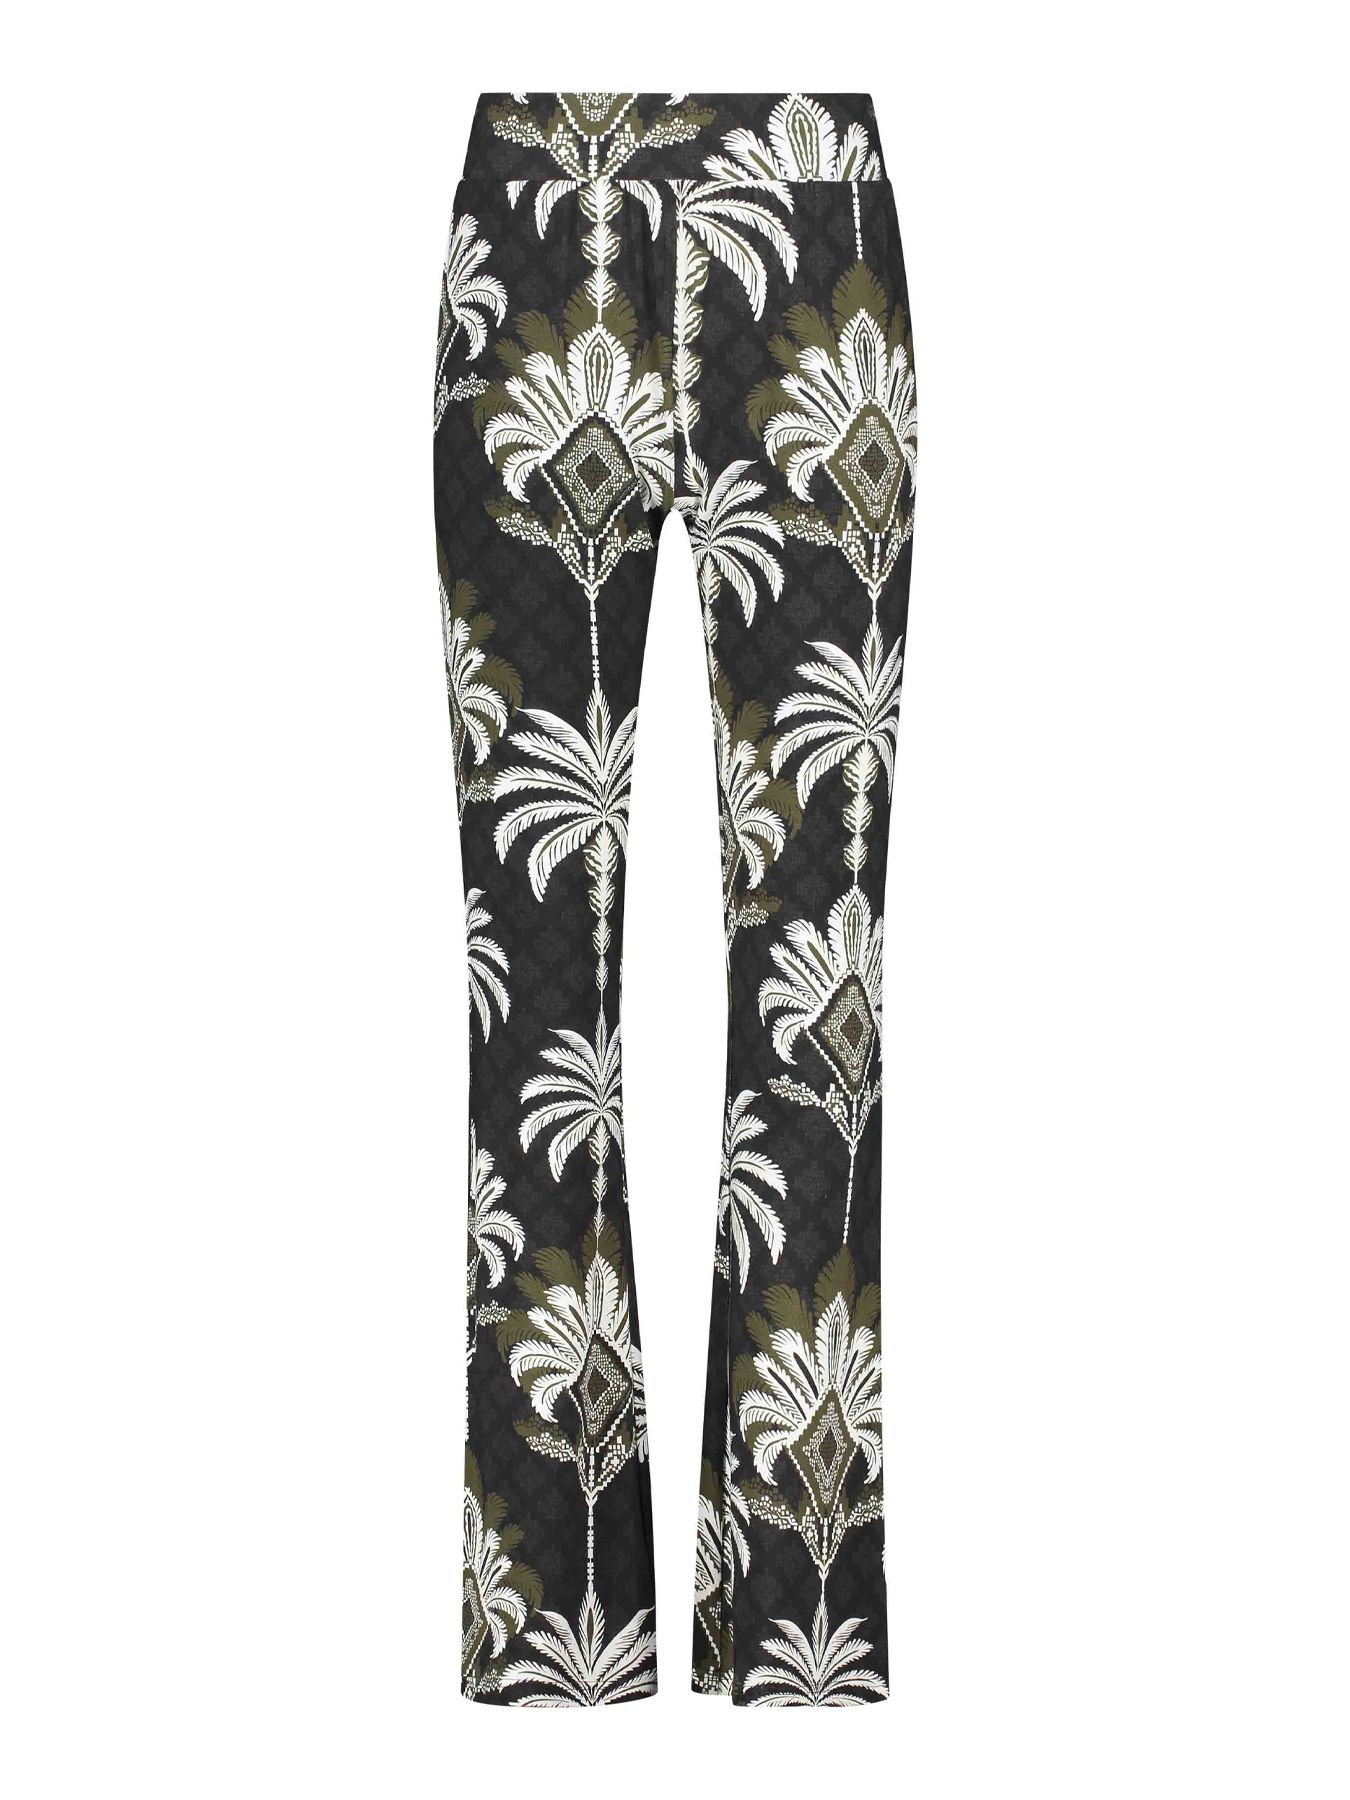 Tramontana Trousers Palm Print Blacks 009998 2900144209025